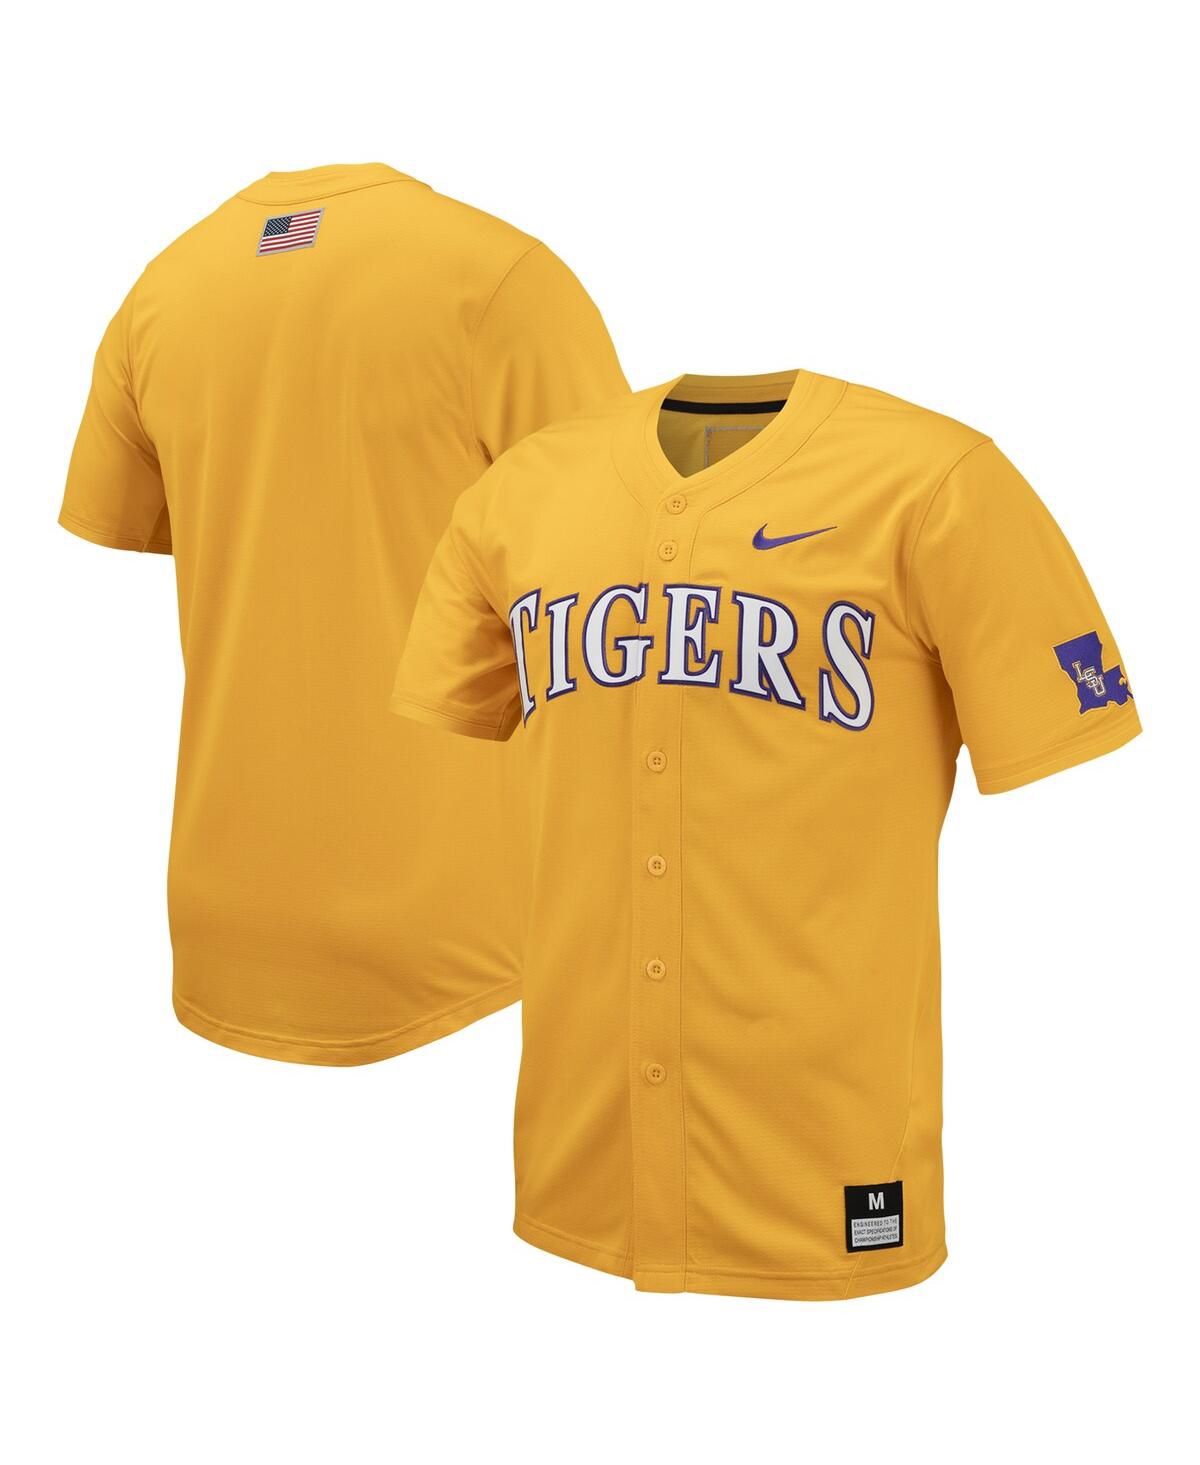 Men's Nike Gold Lsu Tigers Replica Full-Button Baseball Jersey - Gold